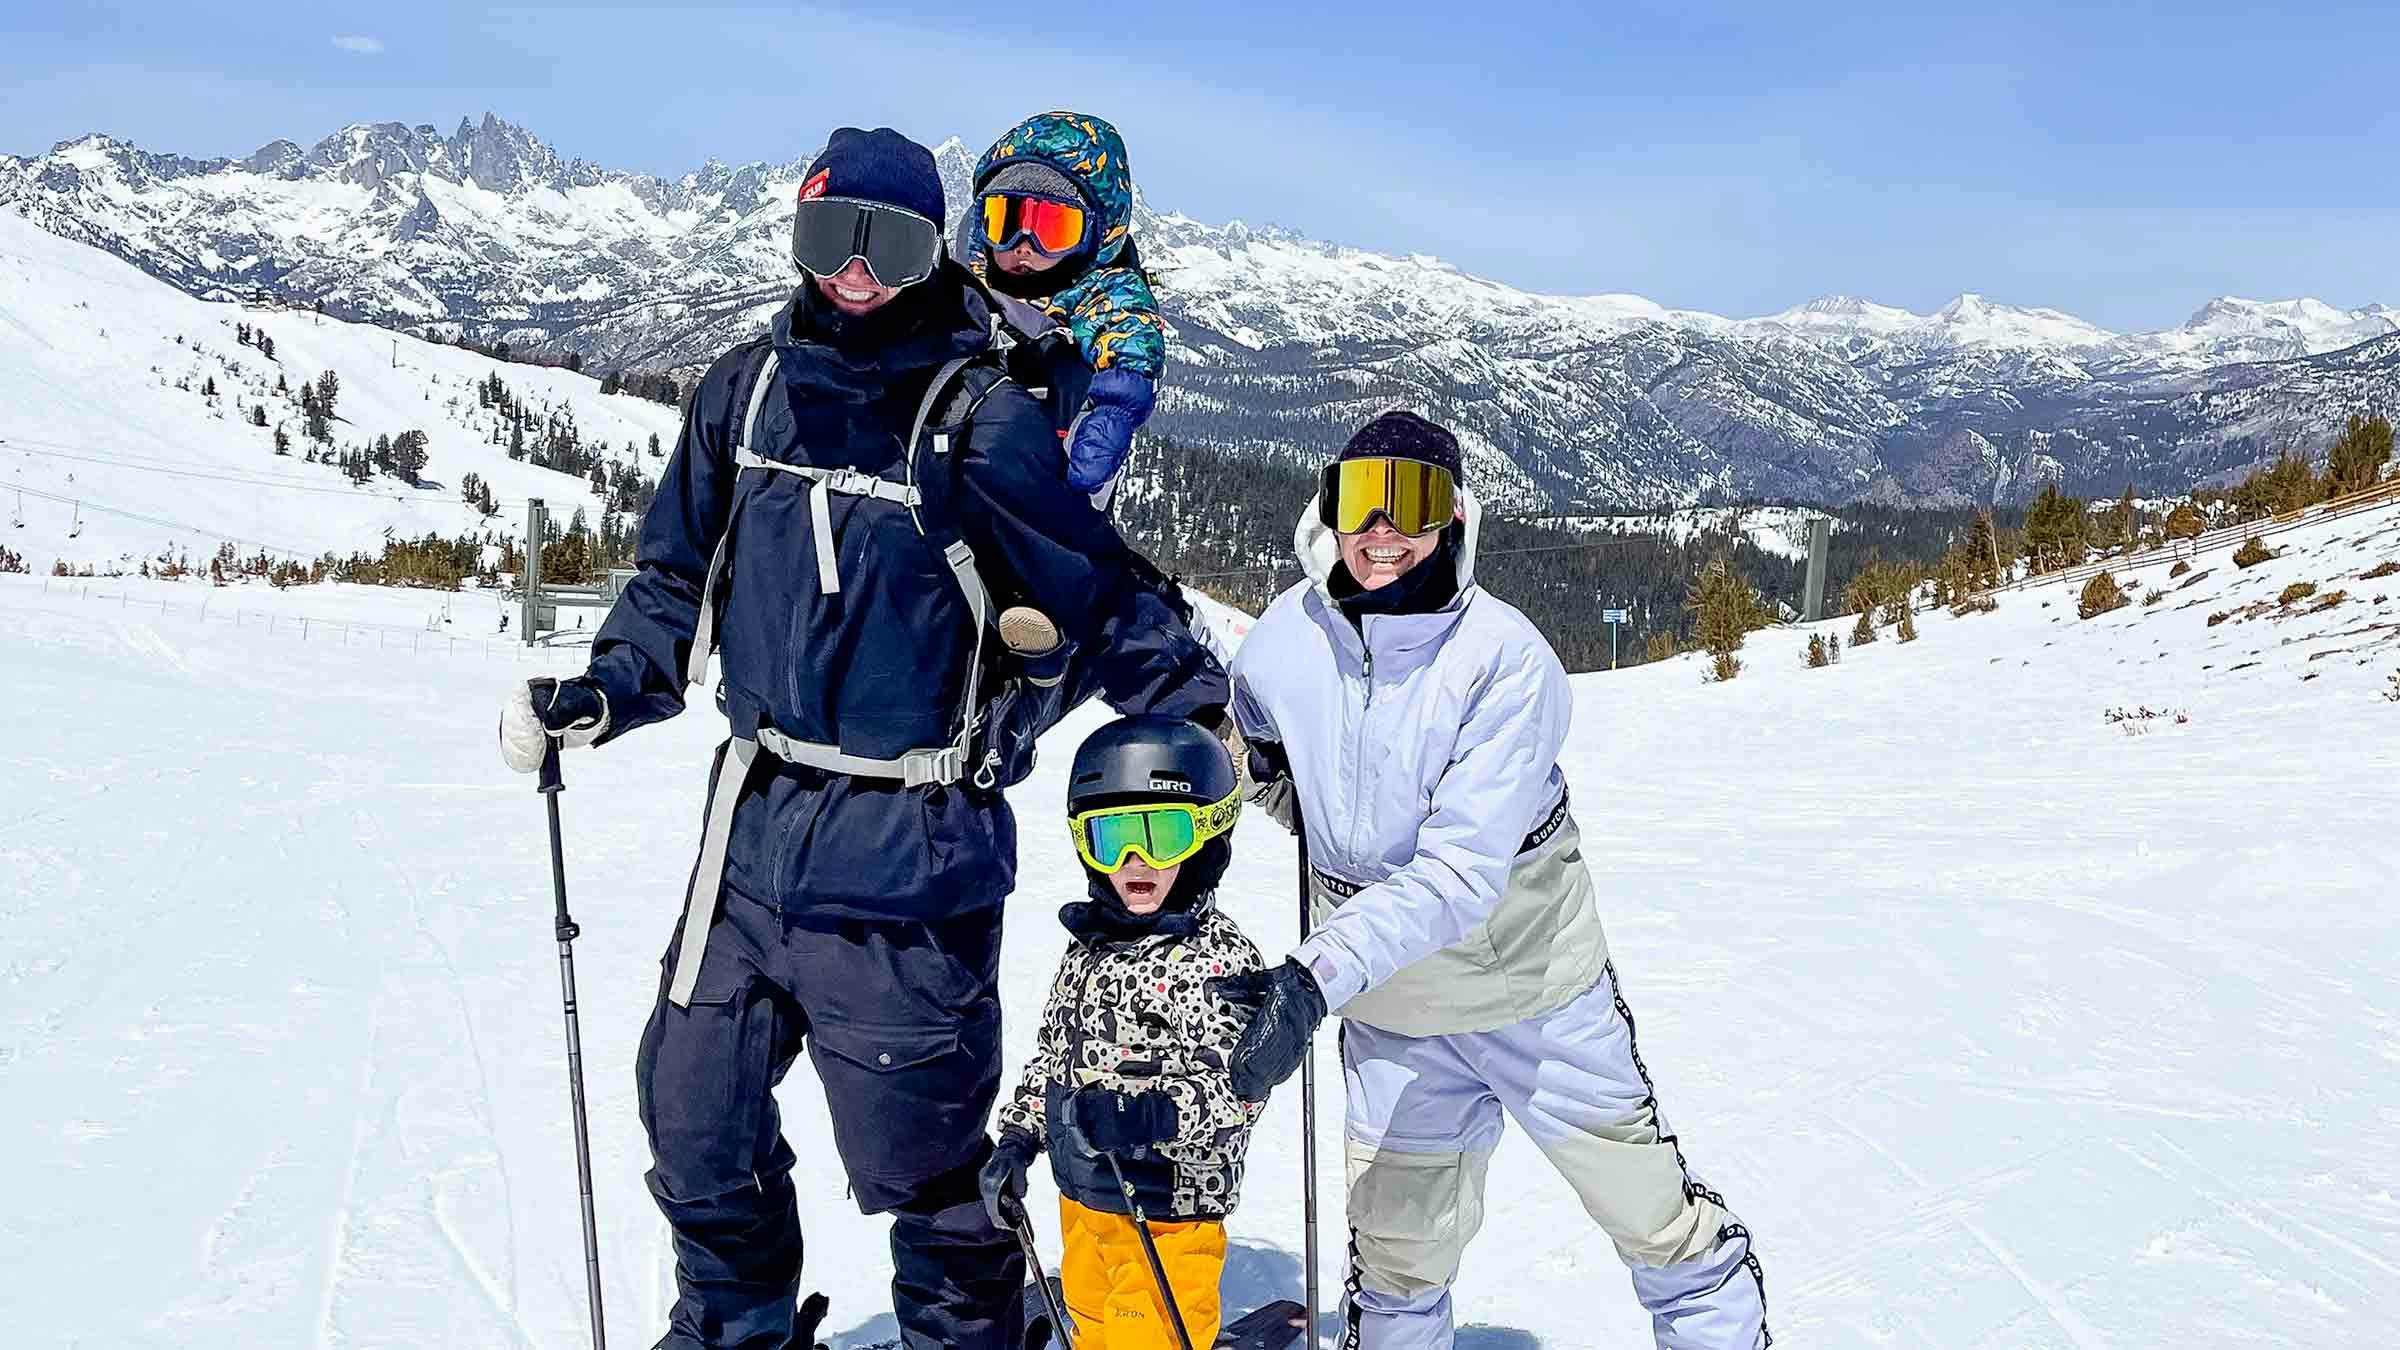 Chris Benchetler skiing with his family.